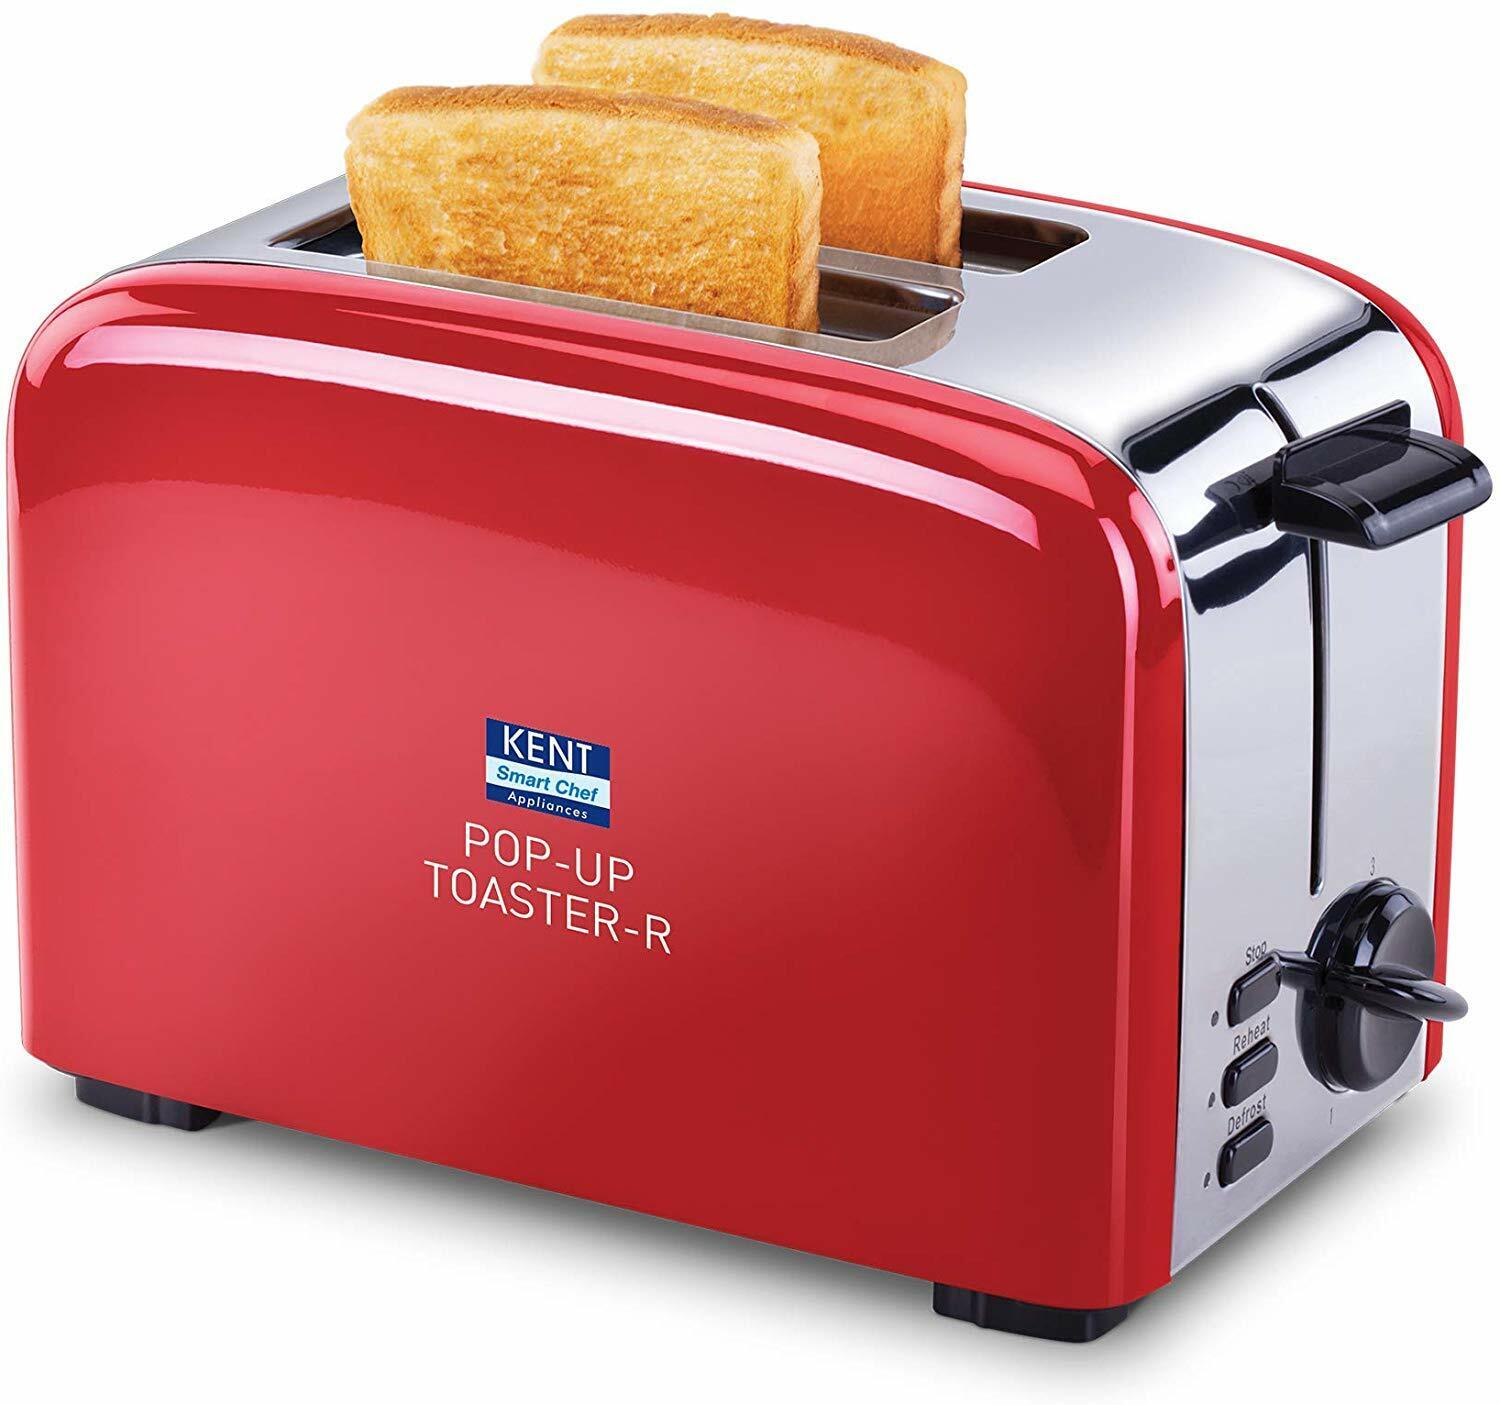 Kent 16030 850-Watt 2-Slice Pop-up Toaster Red - pop-up toaster